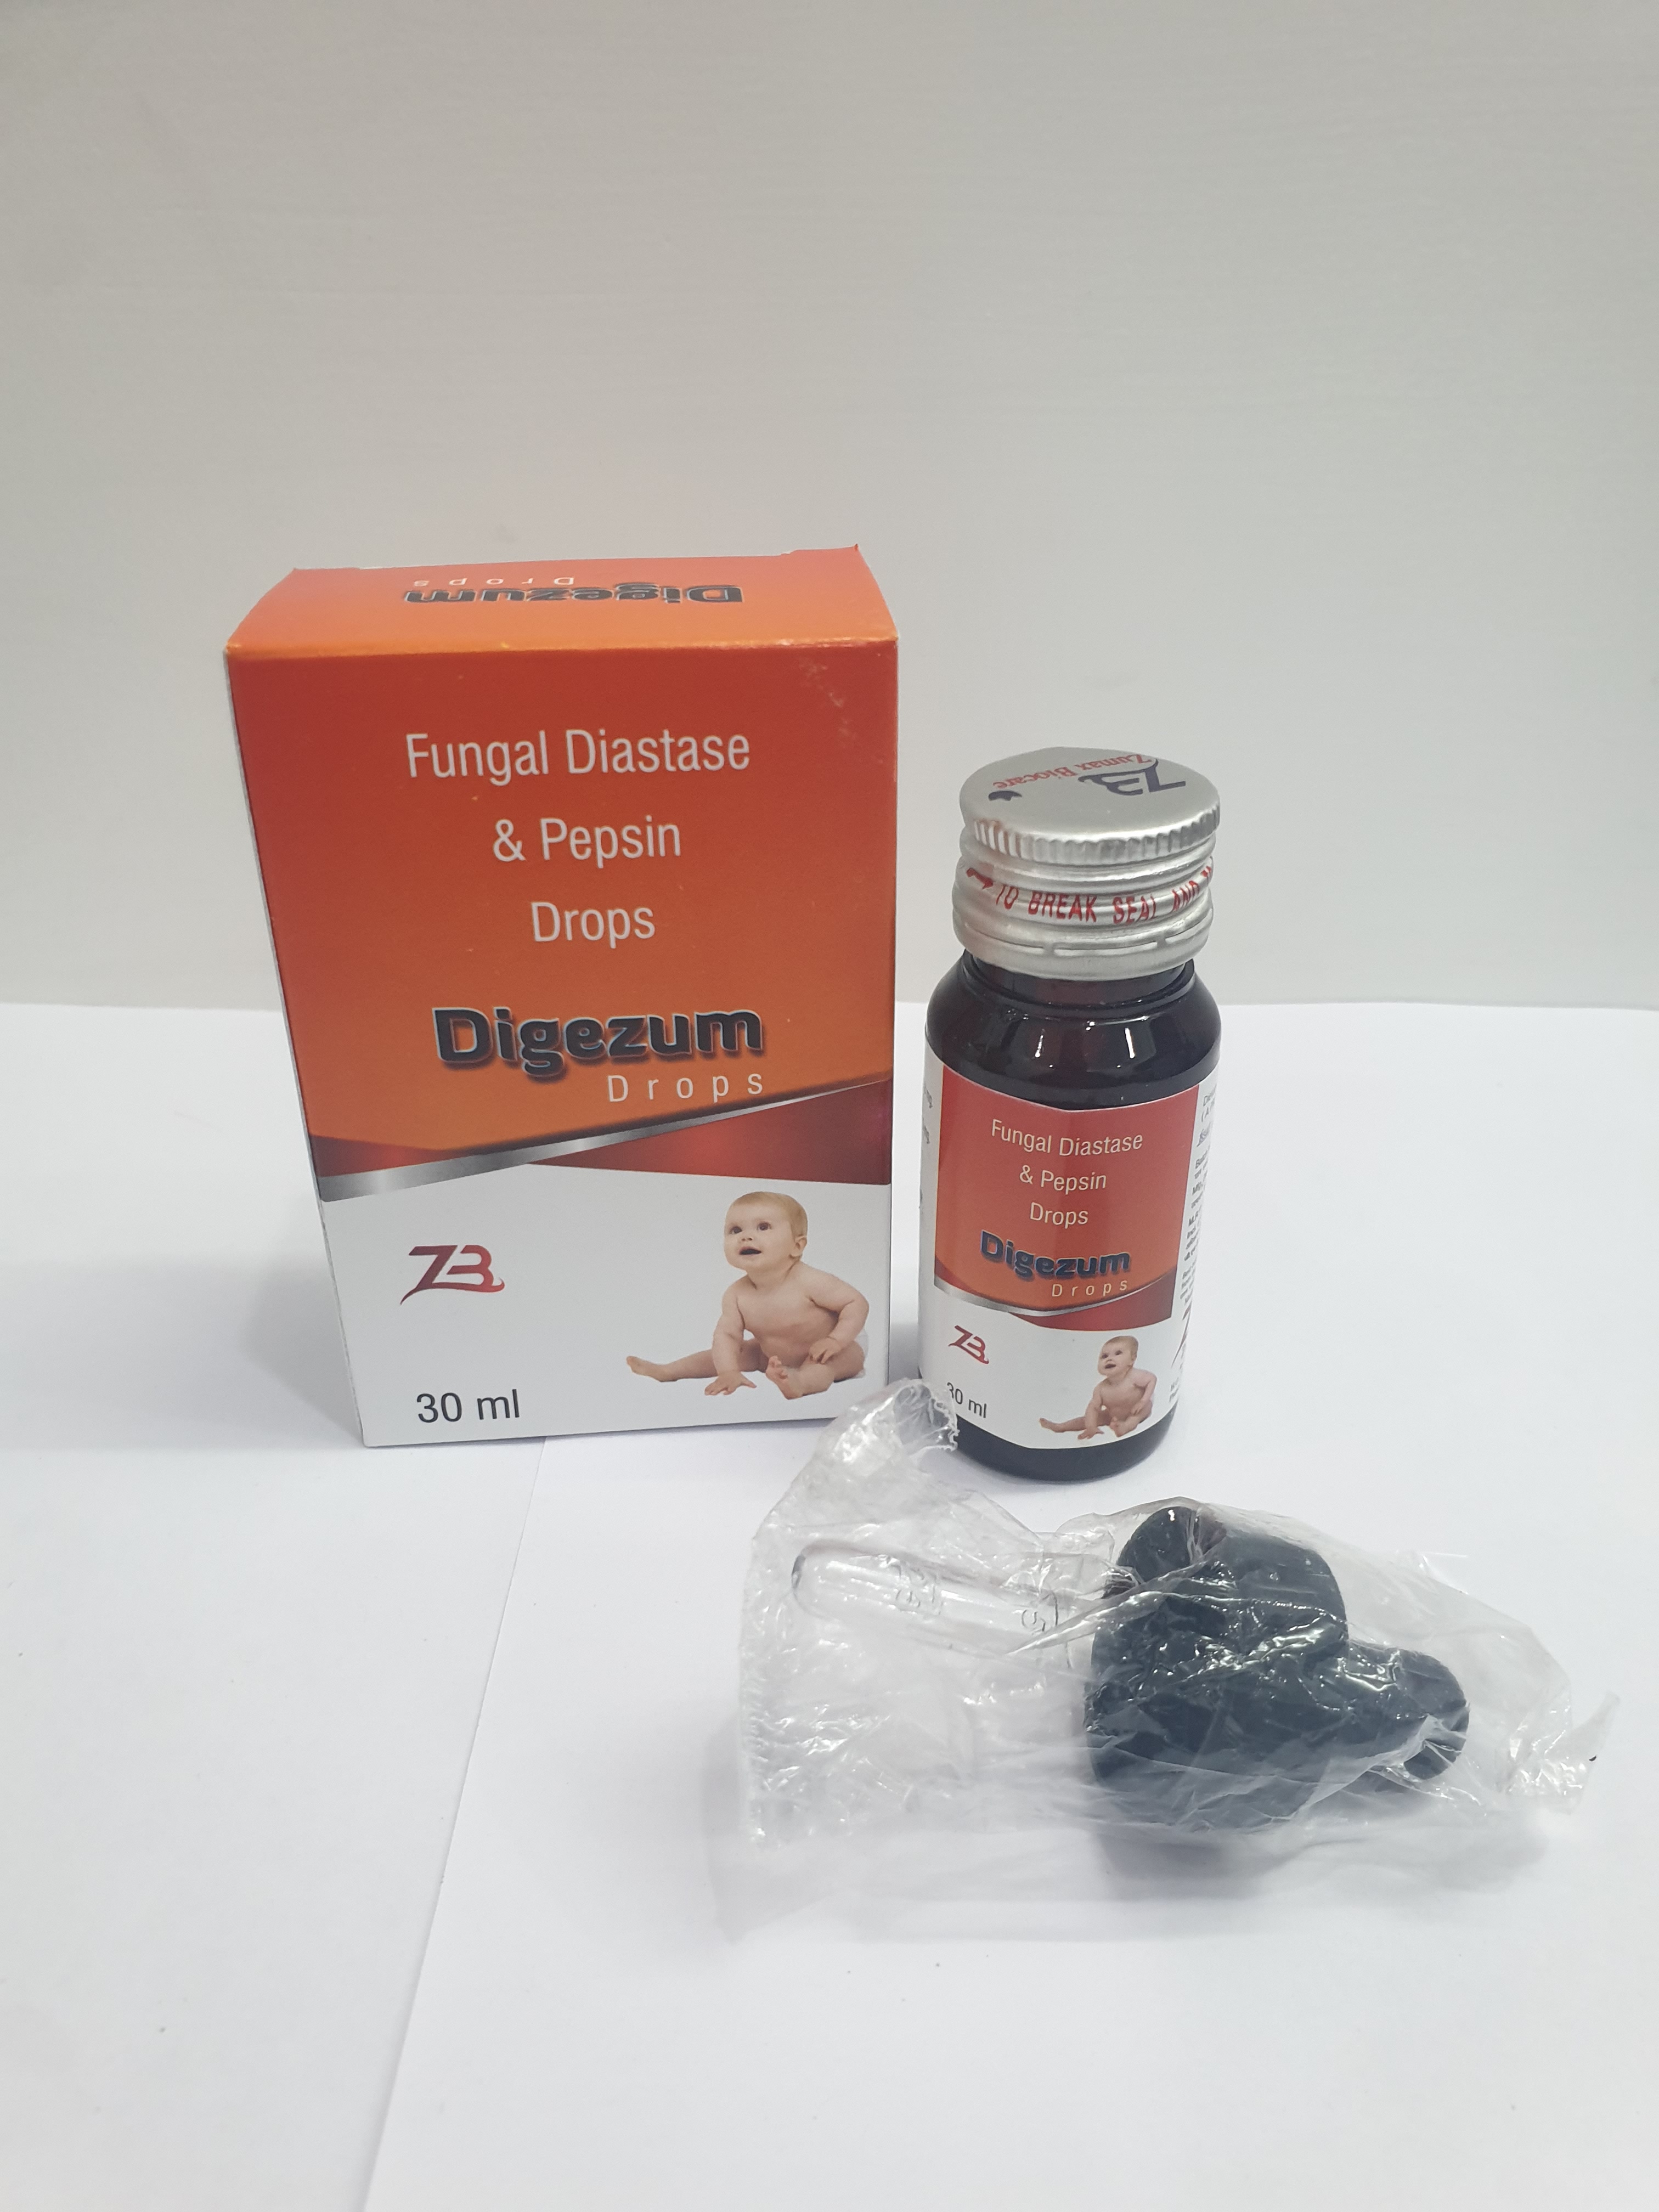 Product Name: Digezum Drops, Compositions of Digezum Drops are Fungal Diastate  & Pepsin Drops - Zumax Biocare